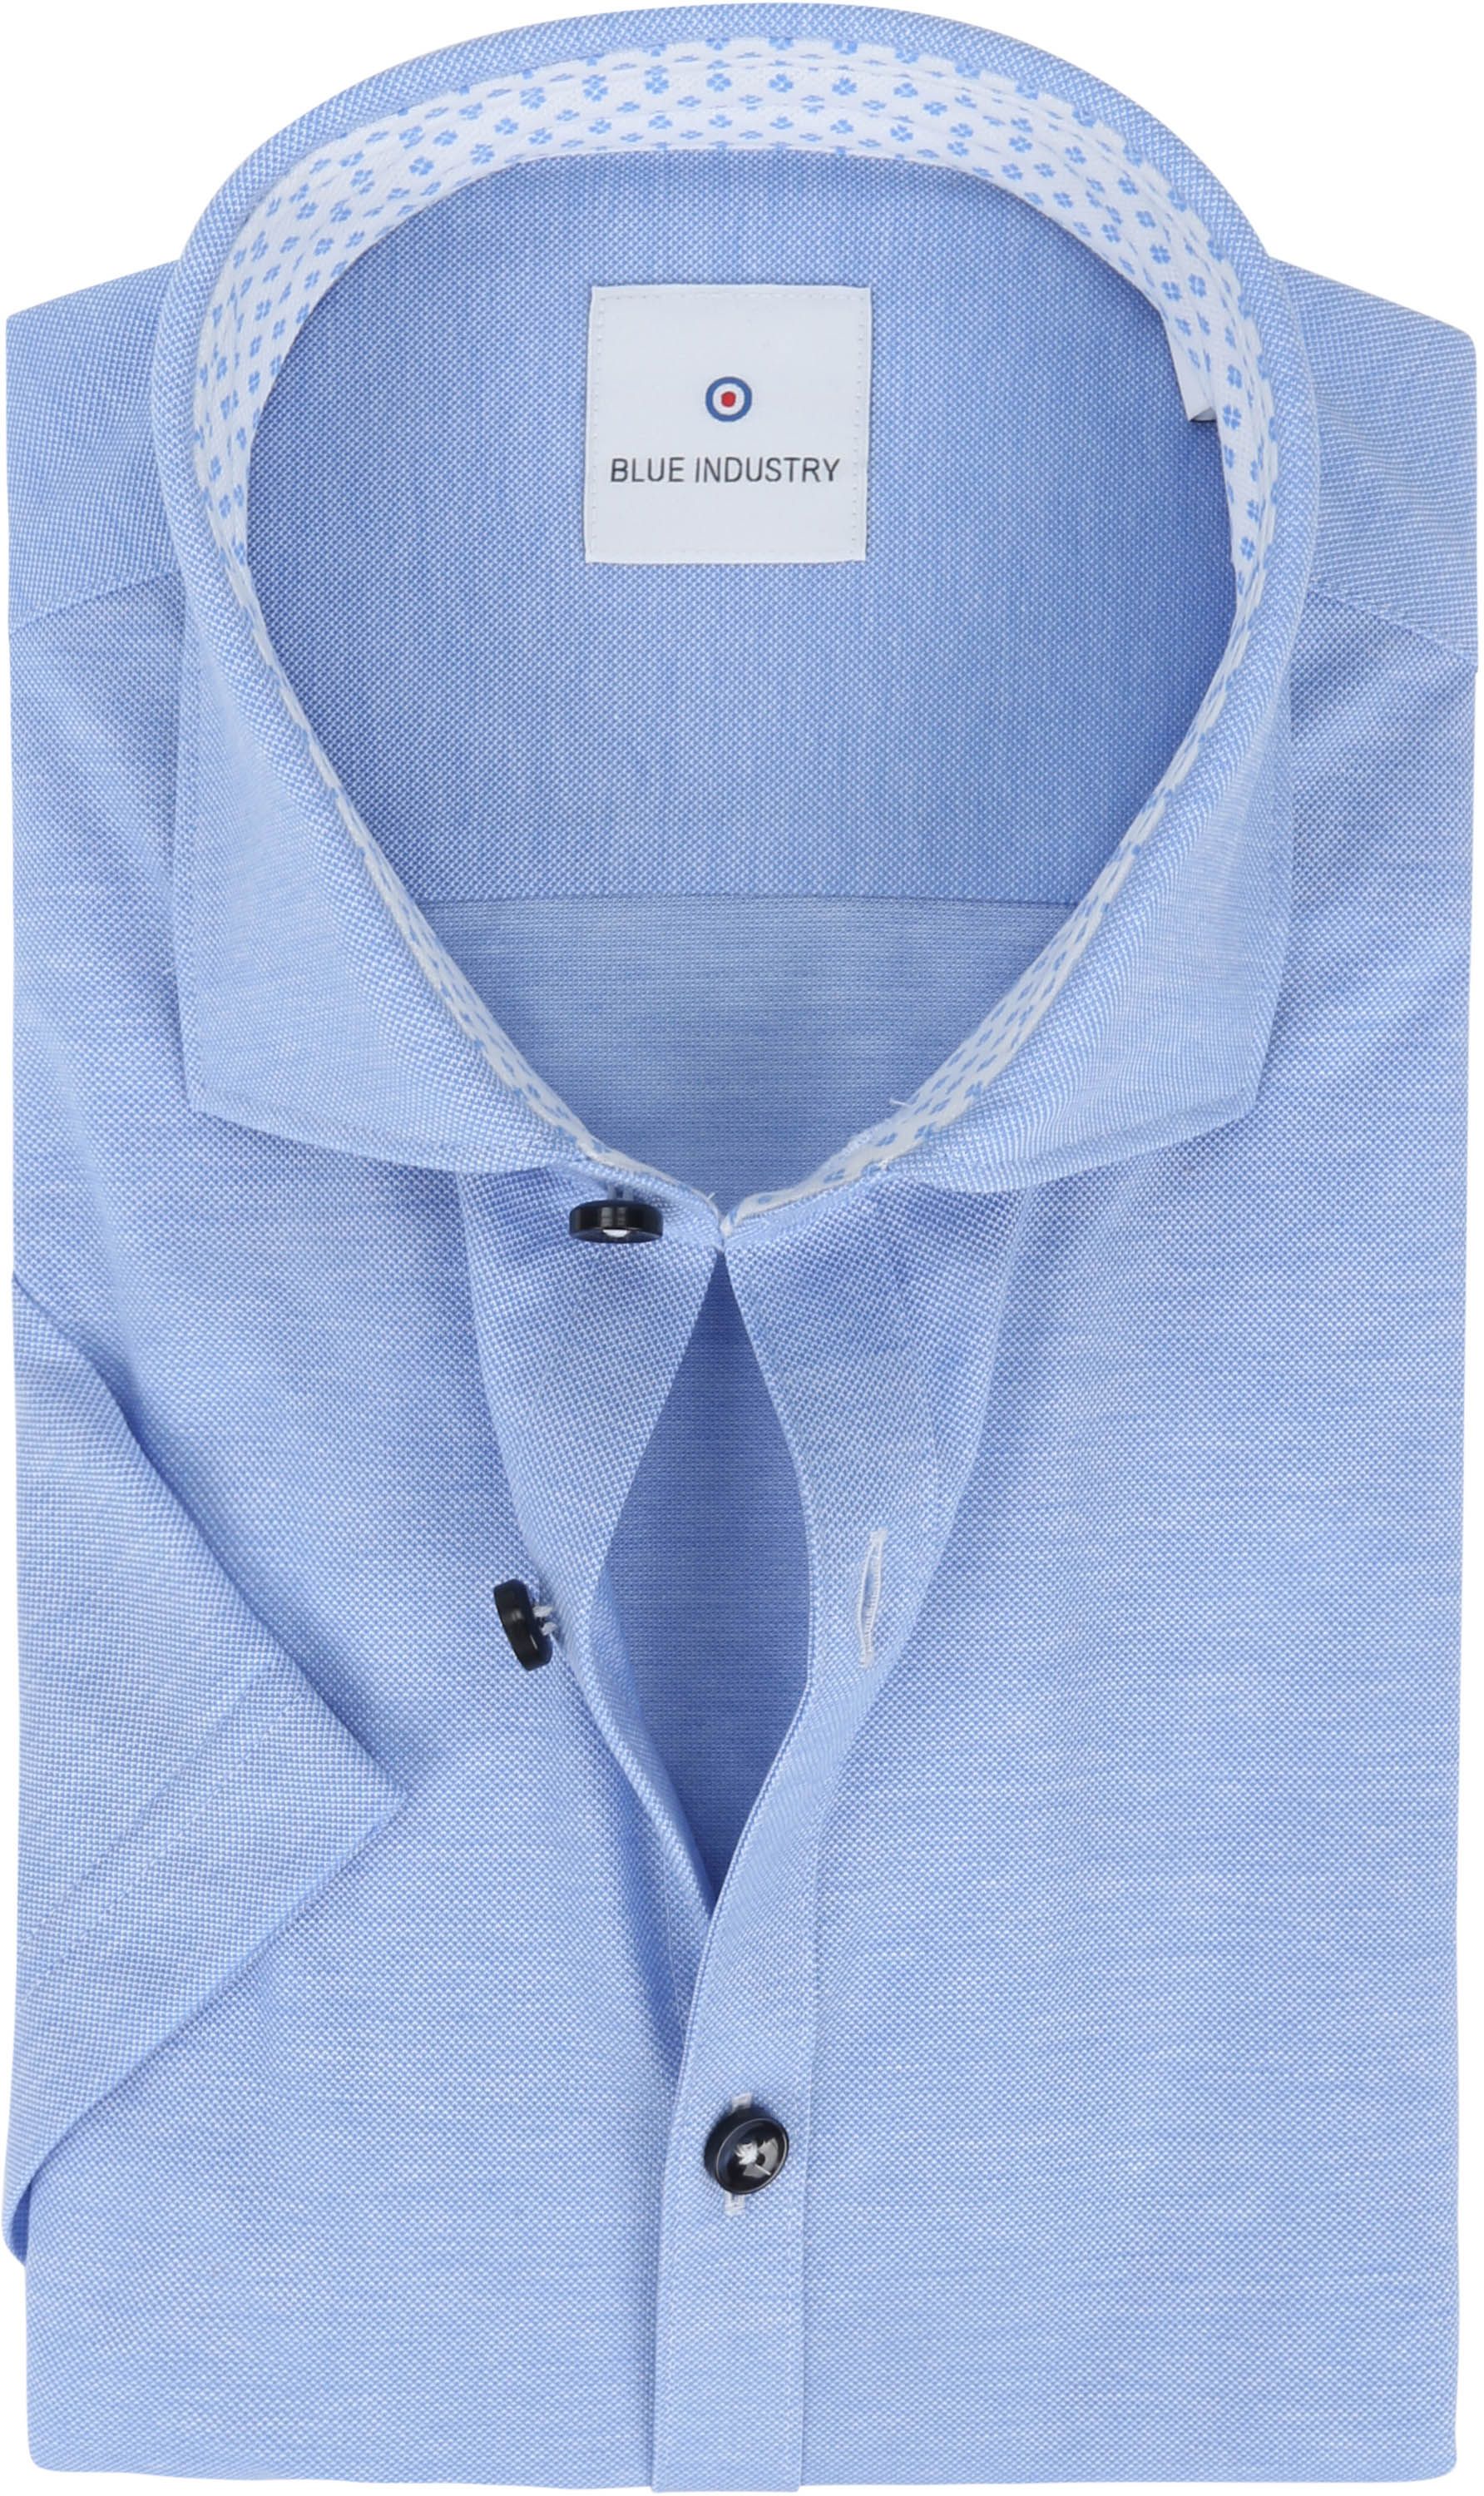 Industry SHS Shirt Jersey Blue size 15